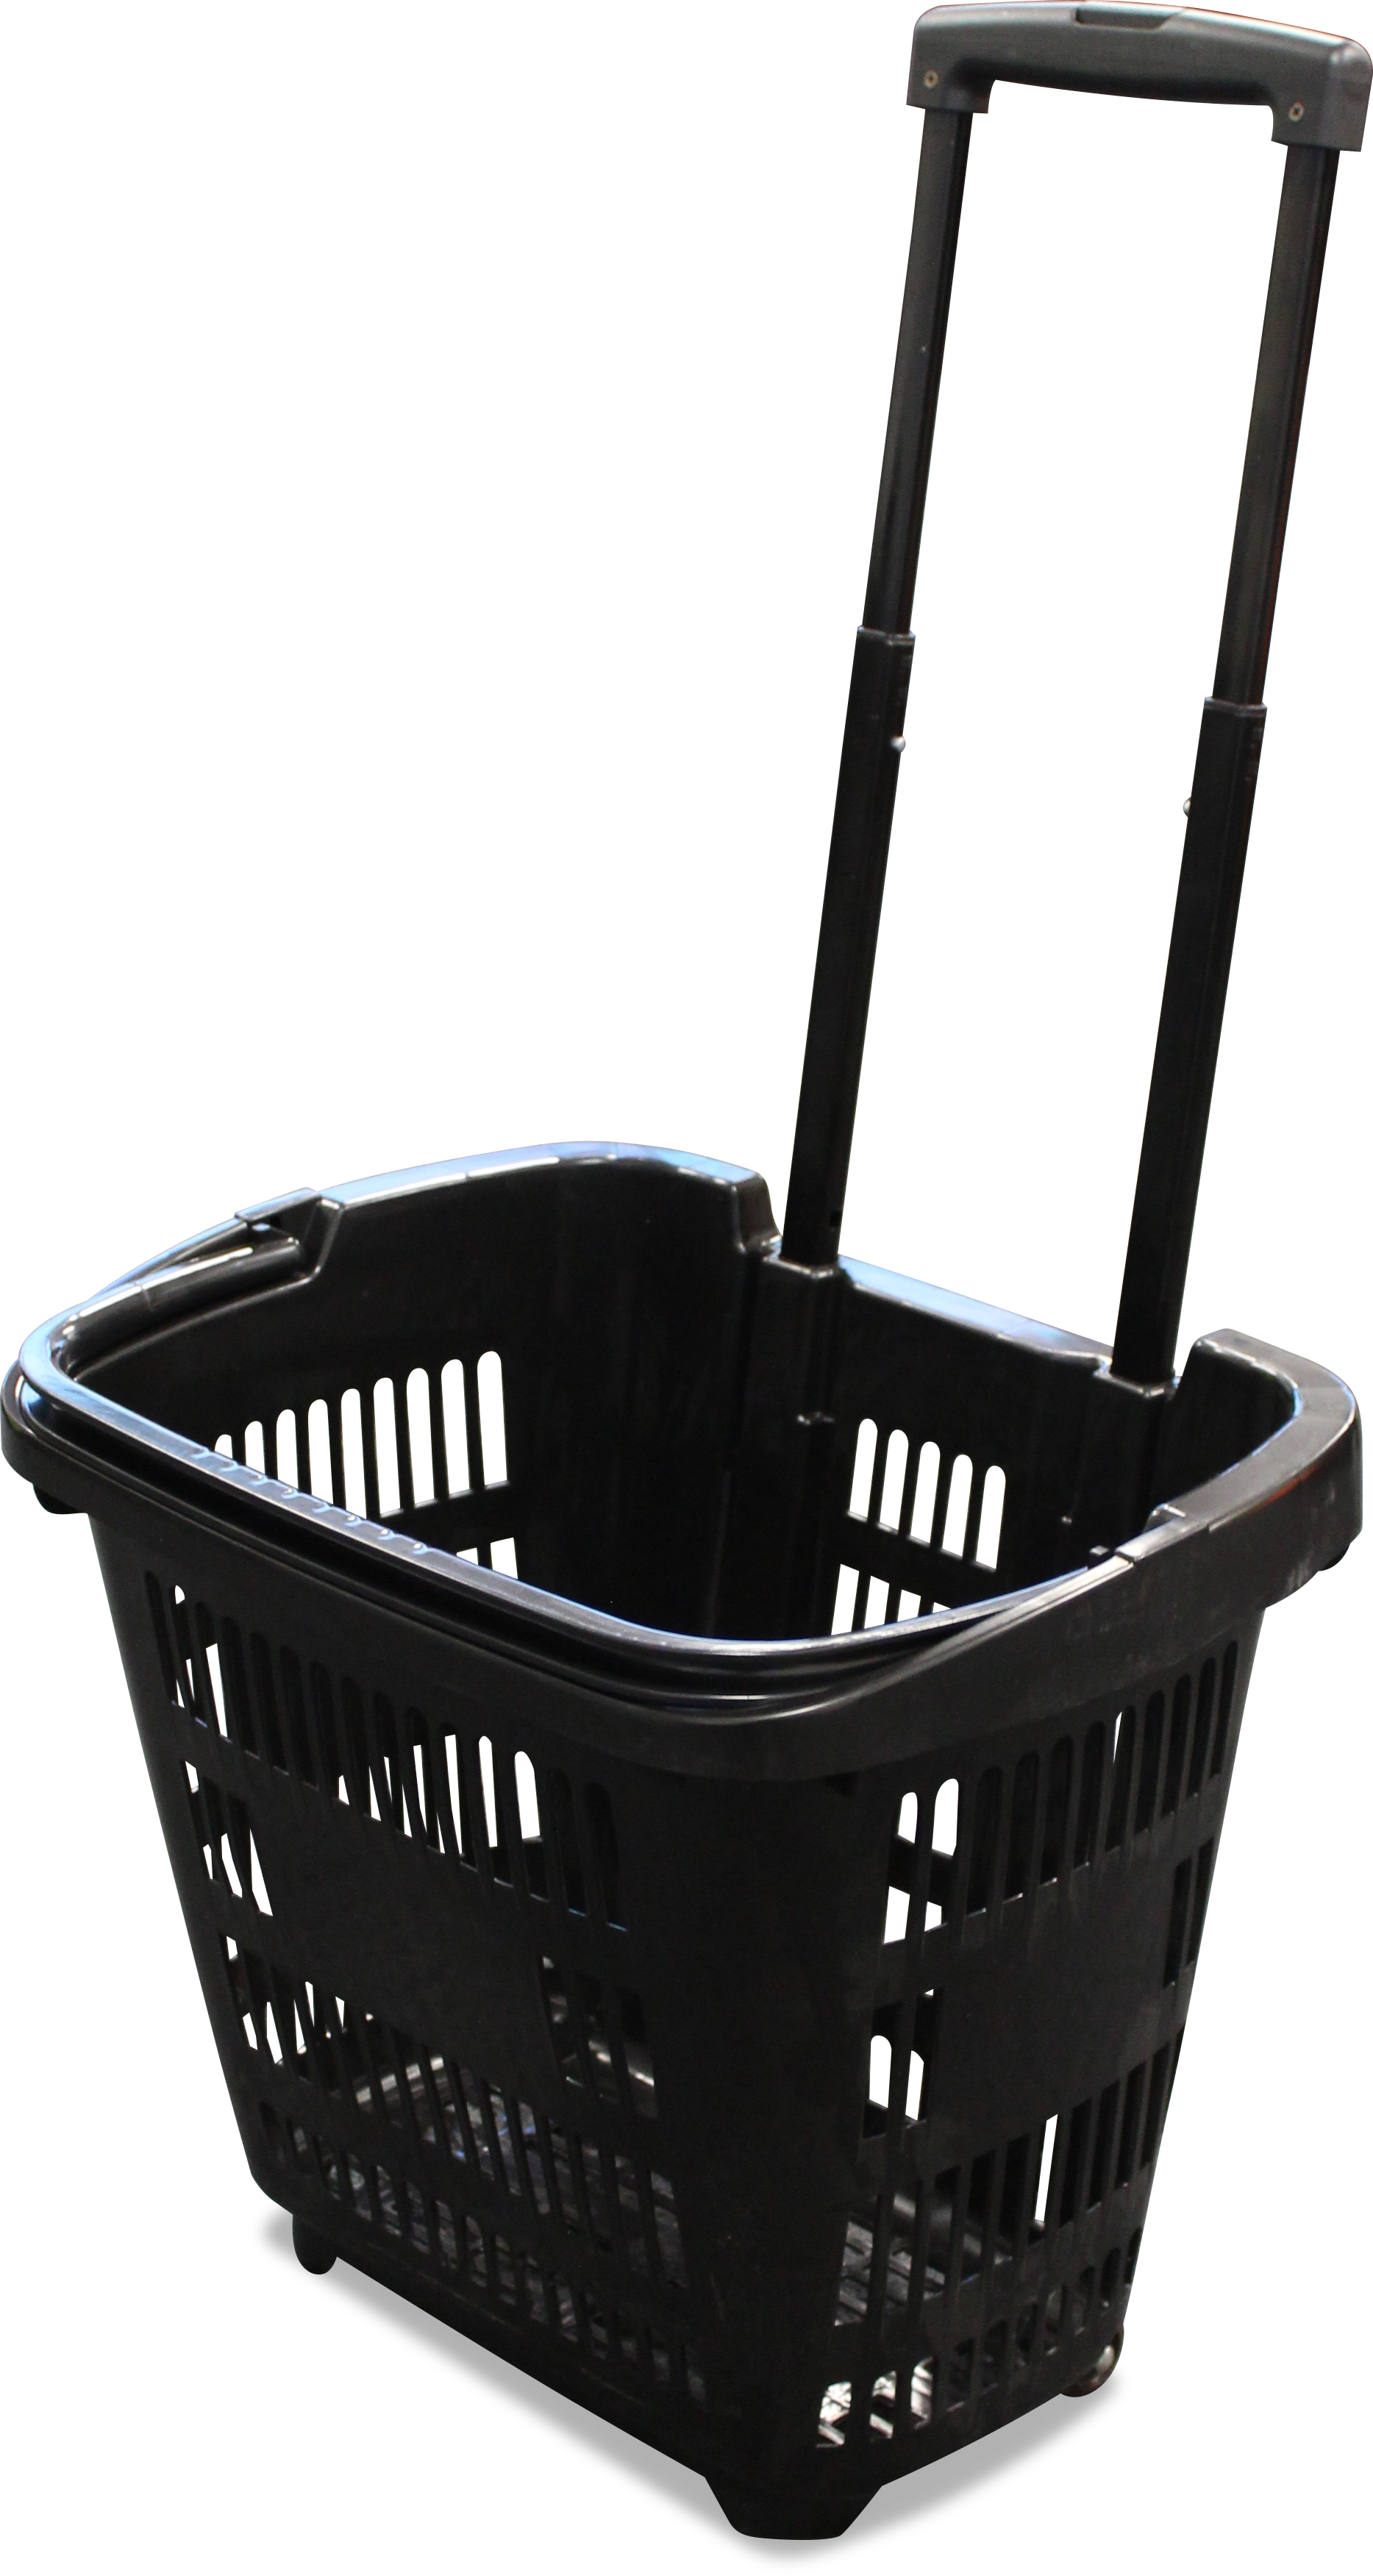 Buy Shopping Basket (Plastic - 2-Wheel) in Shopping Baskets from Astrolift NZ